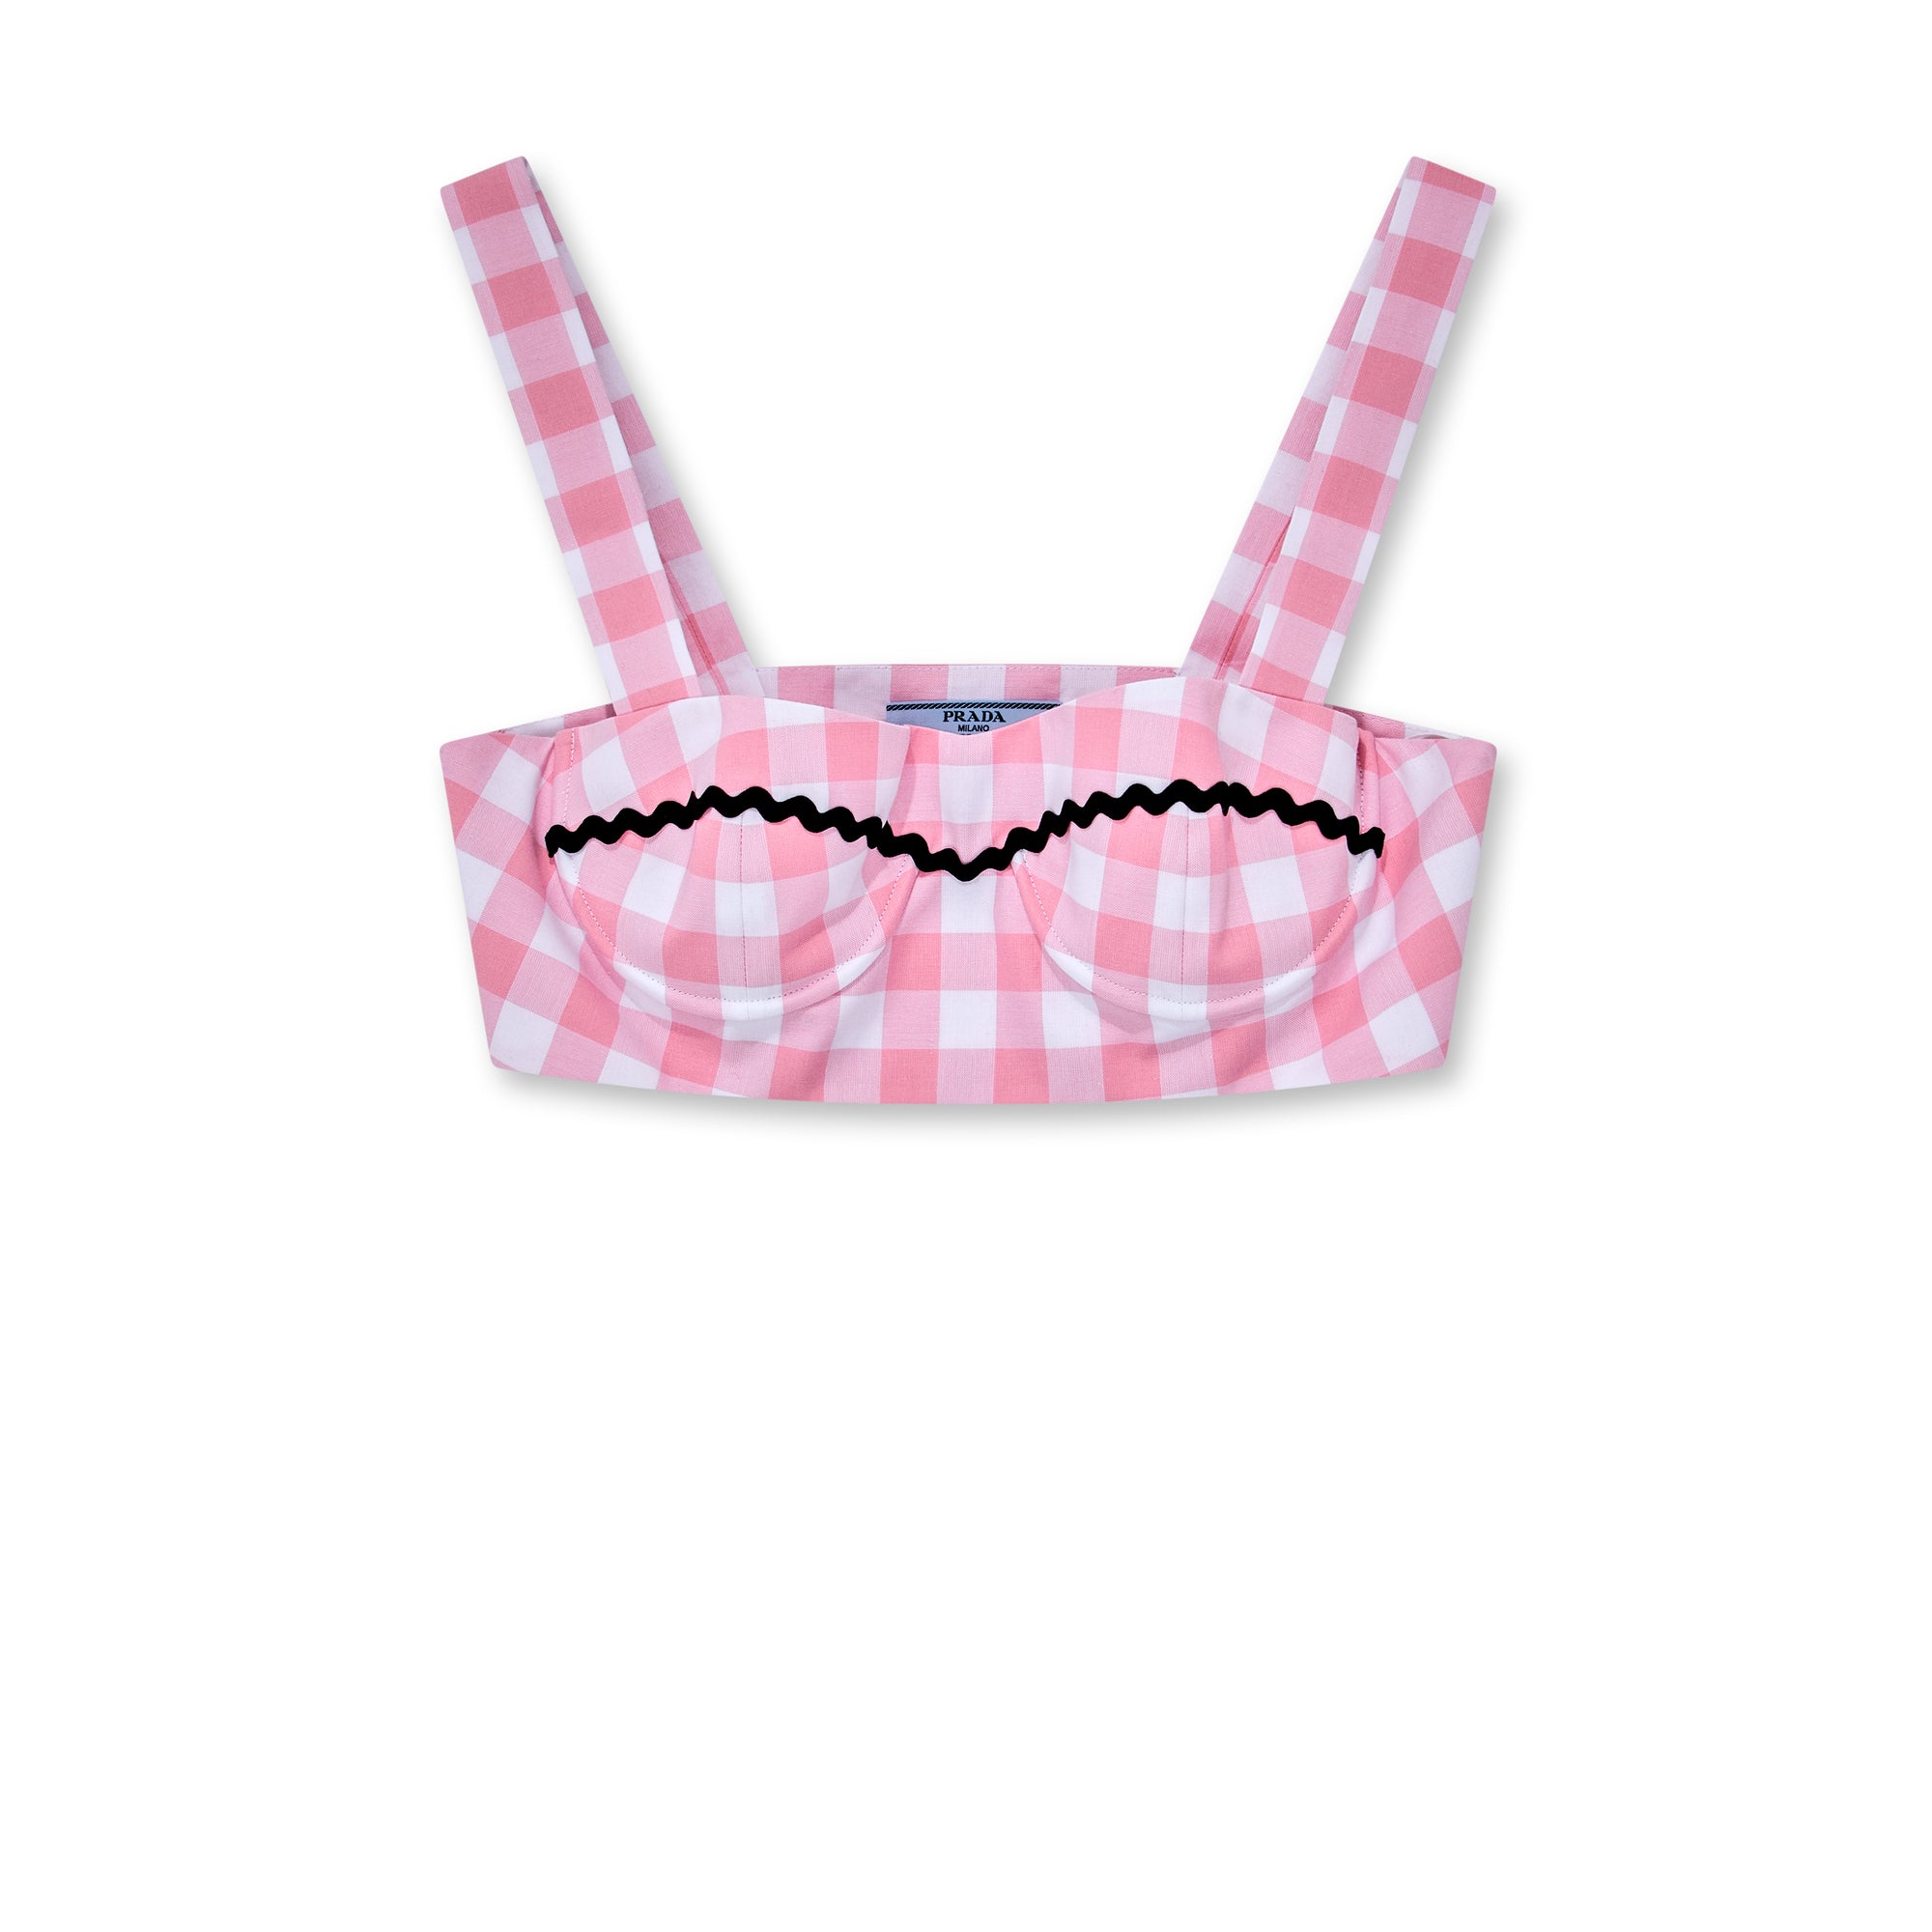 Prada - Women’s Gingham Check Bralette Top - (Pink/Black) view 5